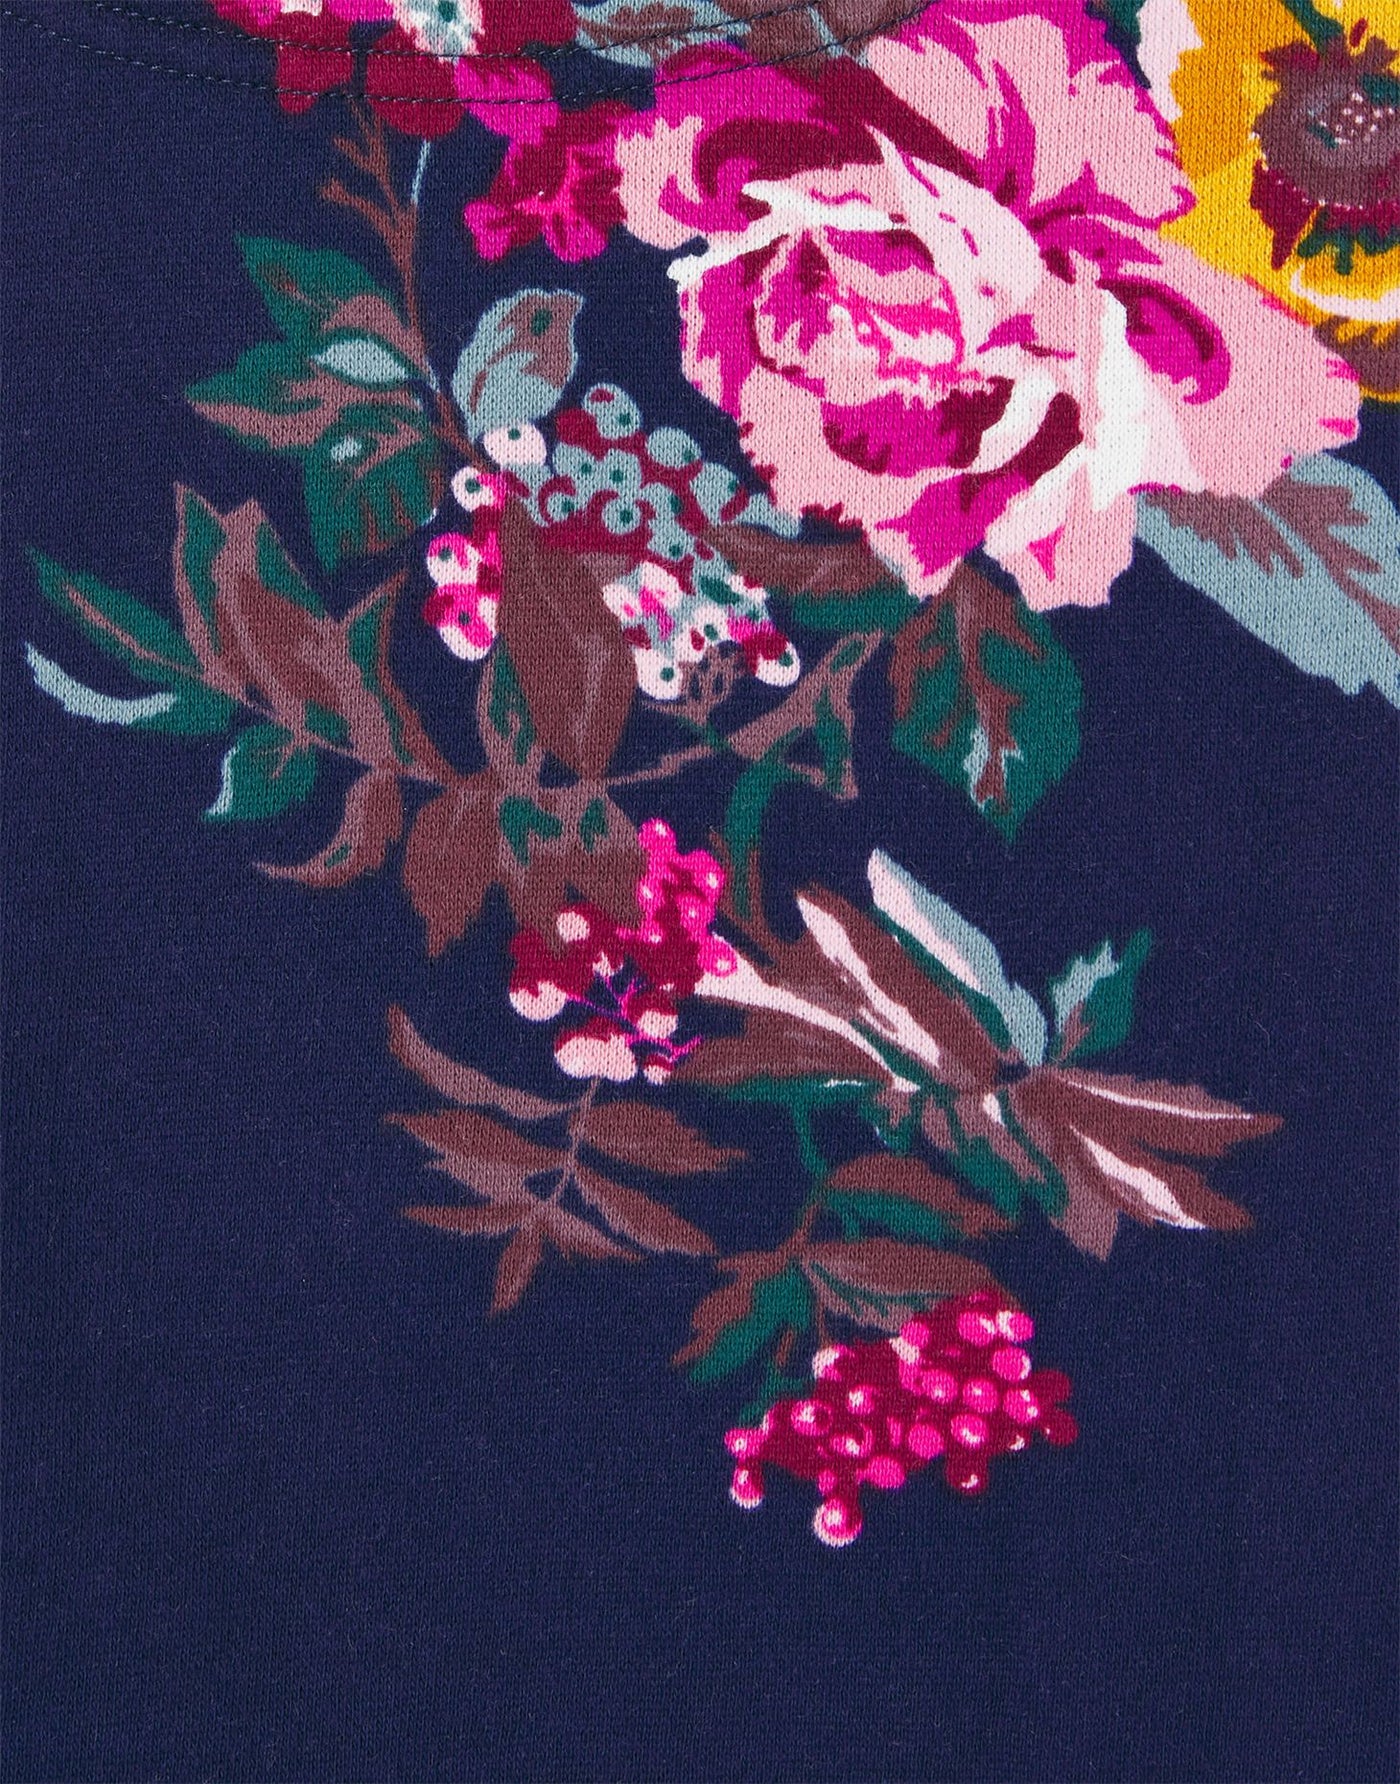 Fairdale Sweatshirt in Navy Floral